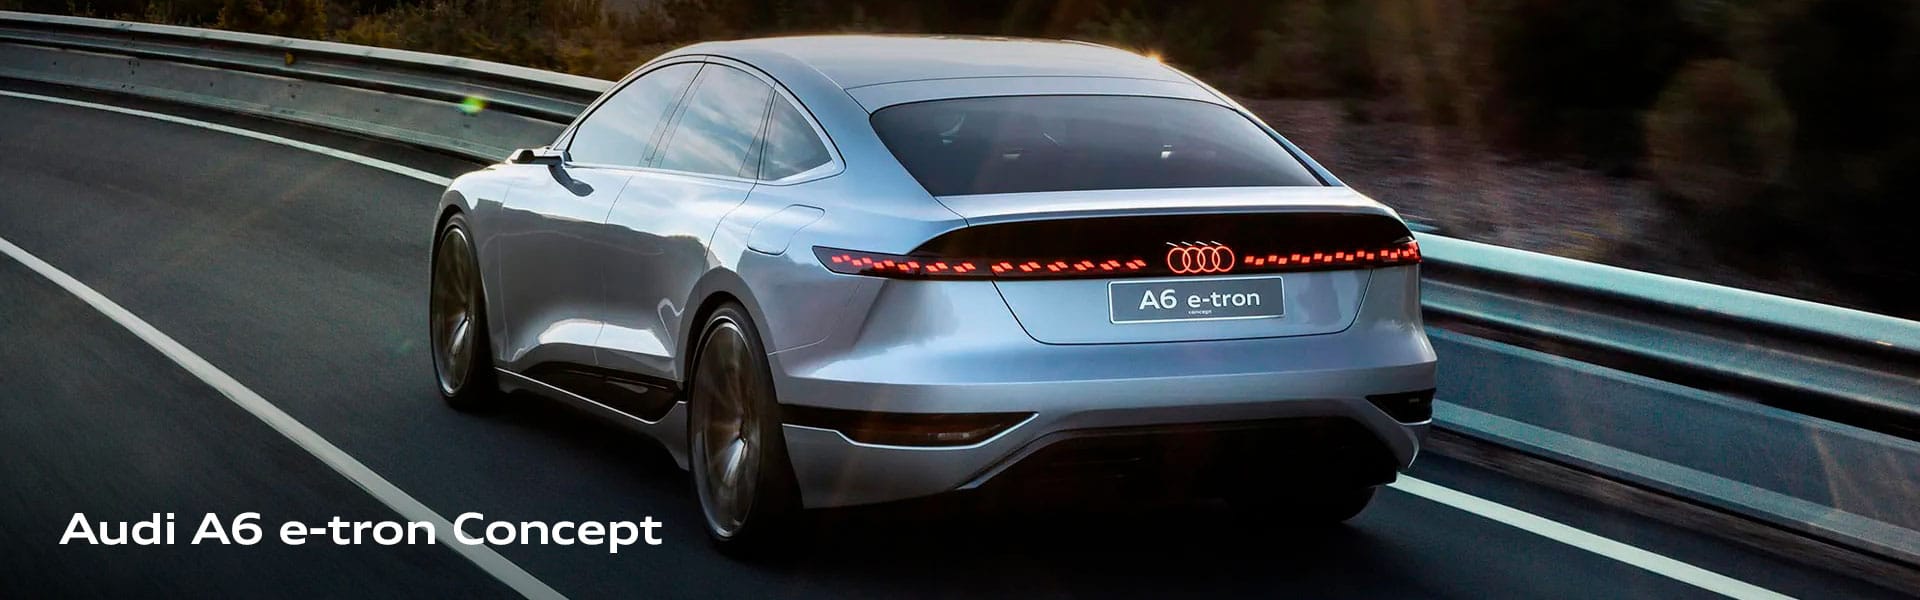 Audi-A6-e-tron-Concept-Cabecera